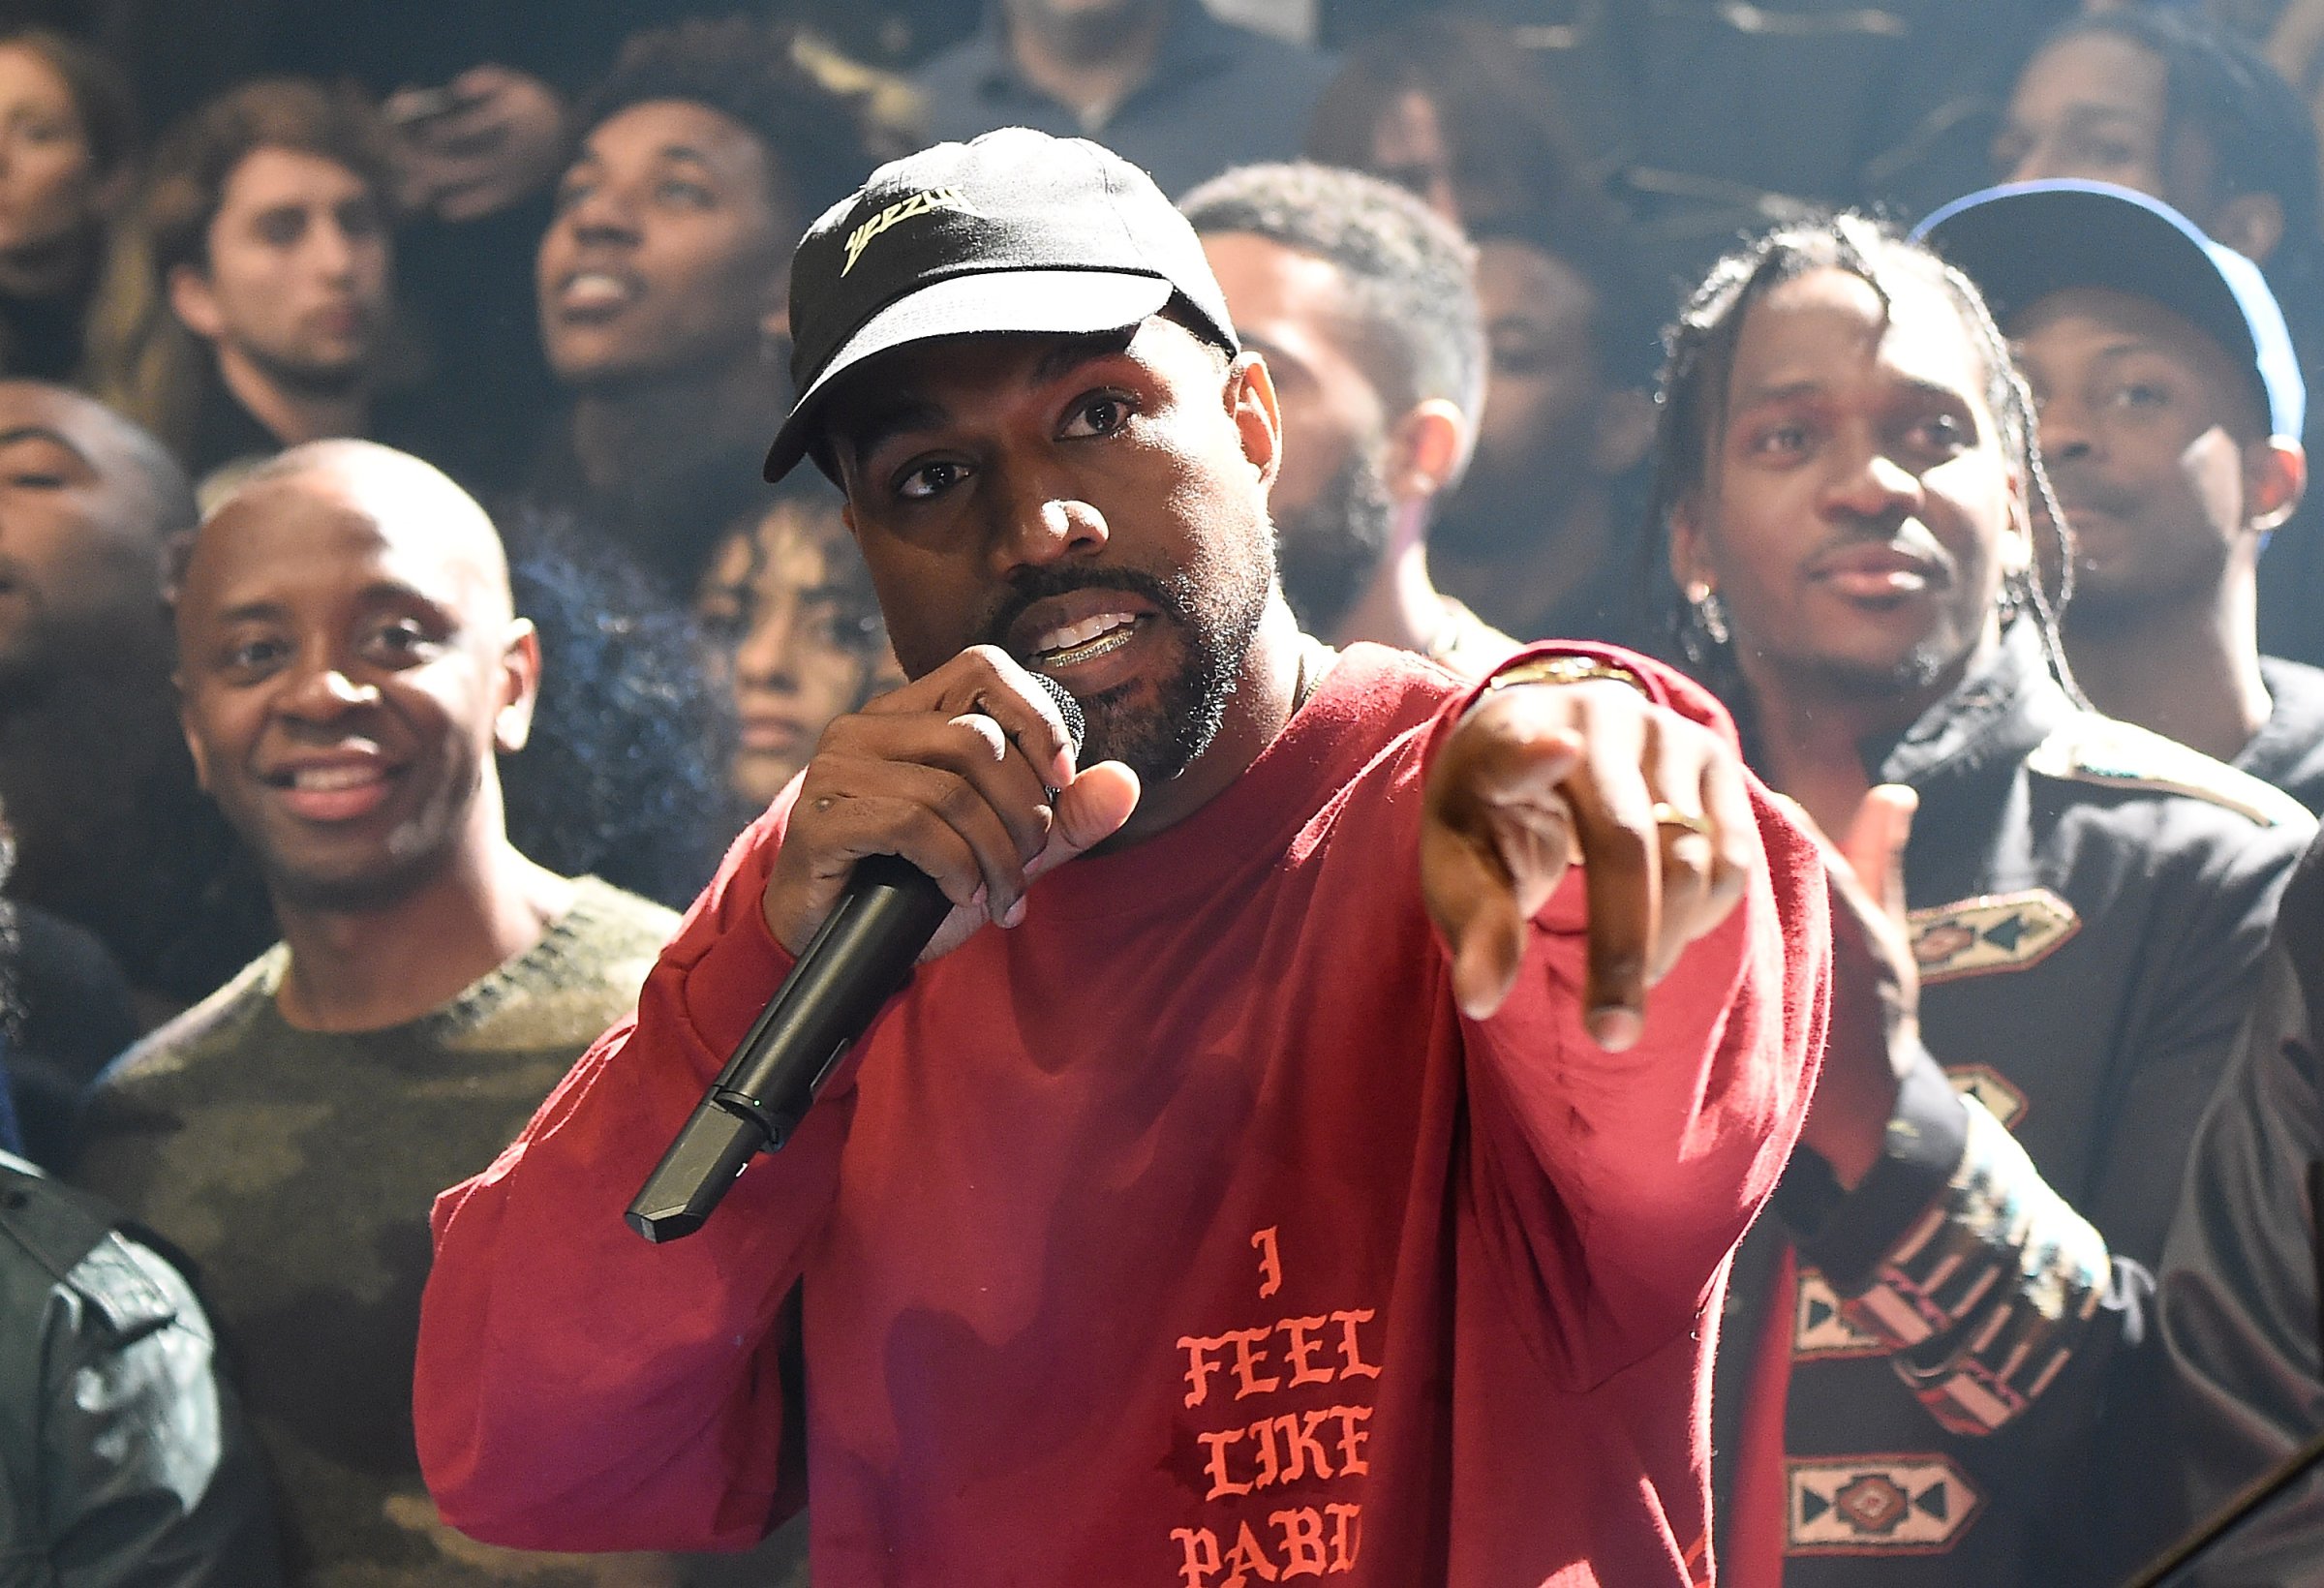 Kanye West speaks at Kanye West Yeezy Season 3 at Madison Square Garden on February 11, 2016 in New York City.